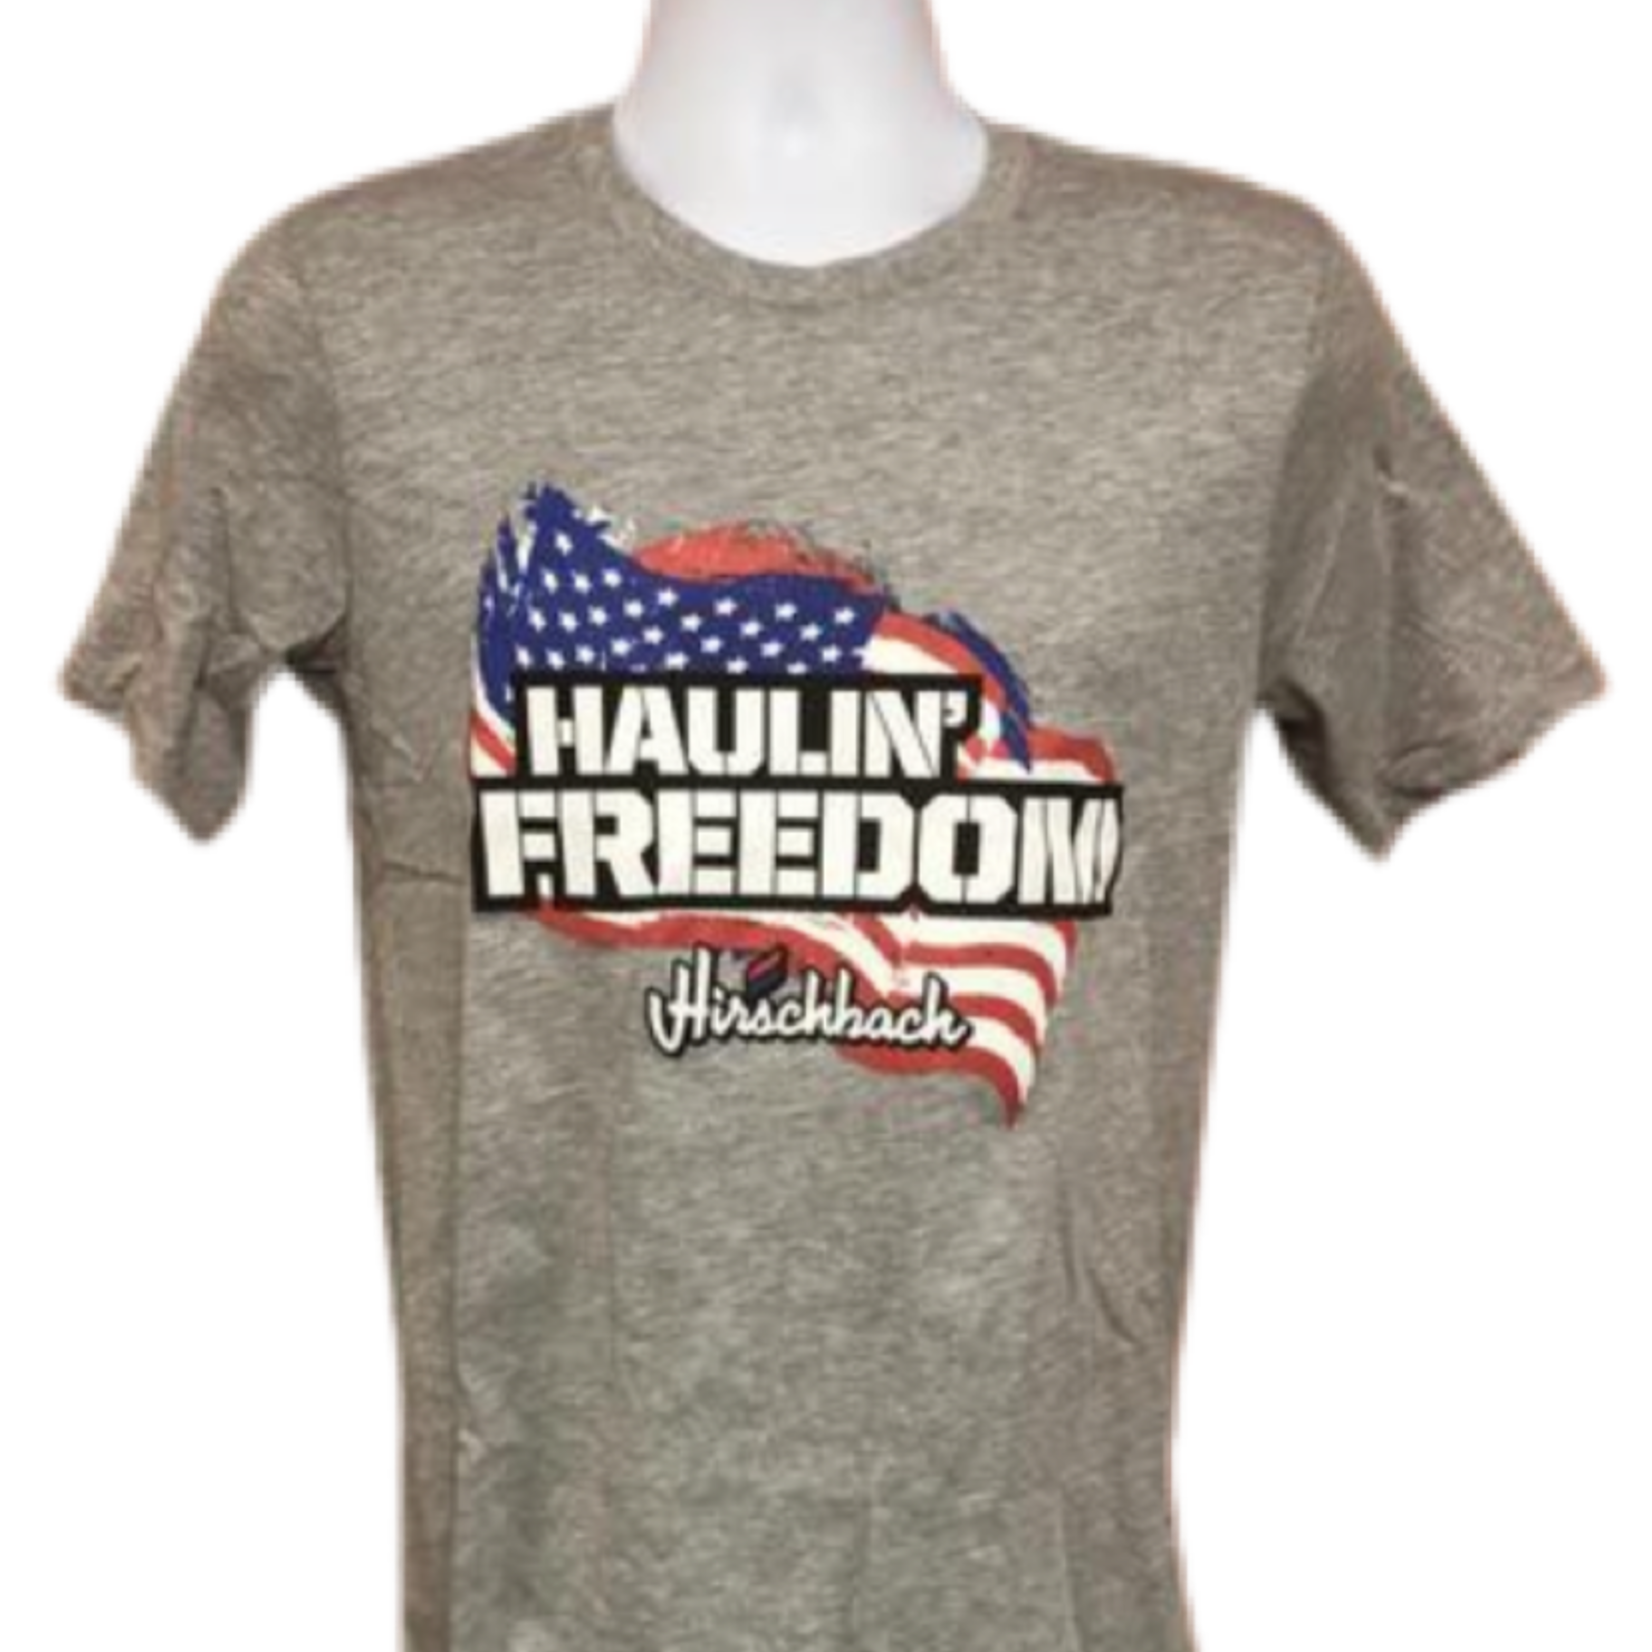 Haulin' Freedom Shirt